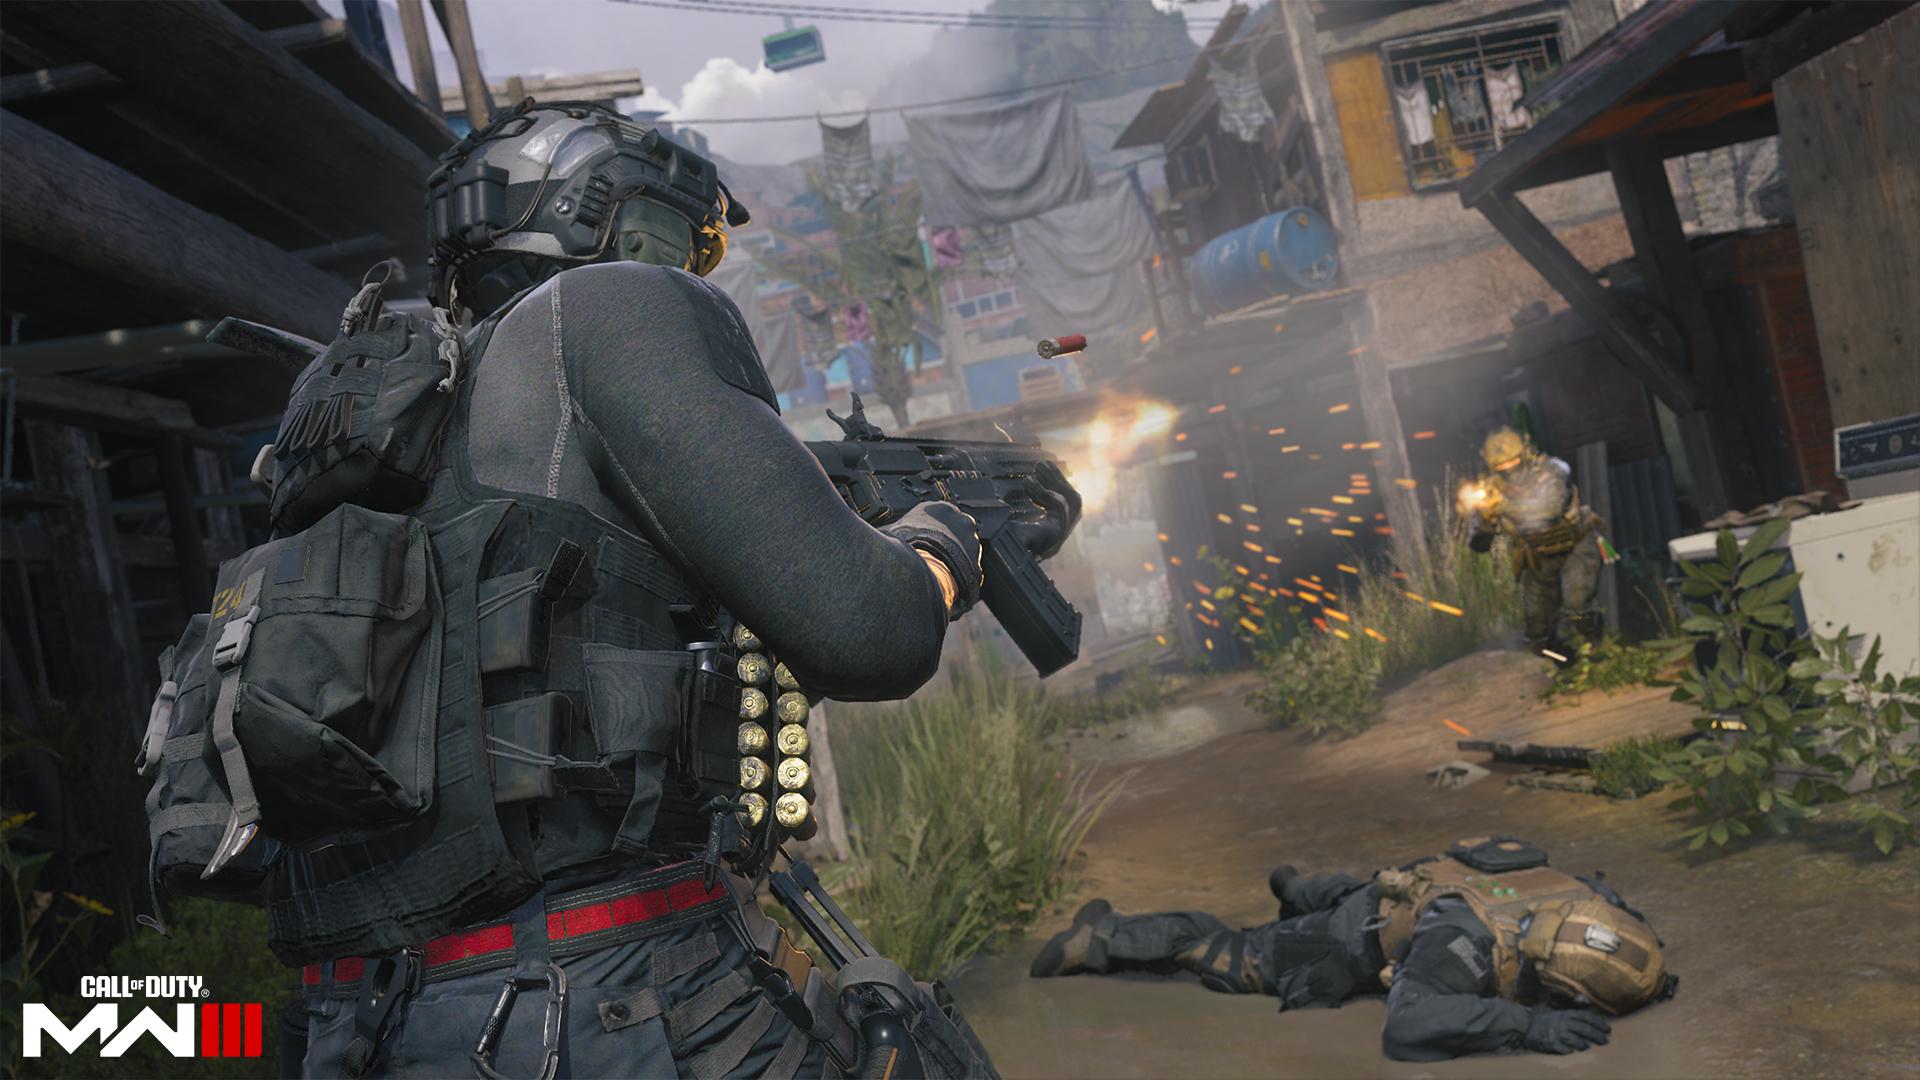 Call of Duty: Modern Warfare Remaster screenshots take us back to